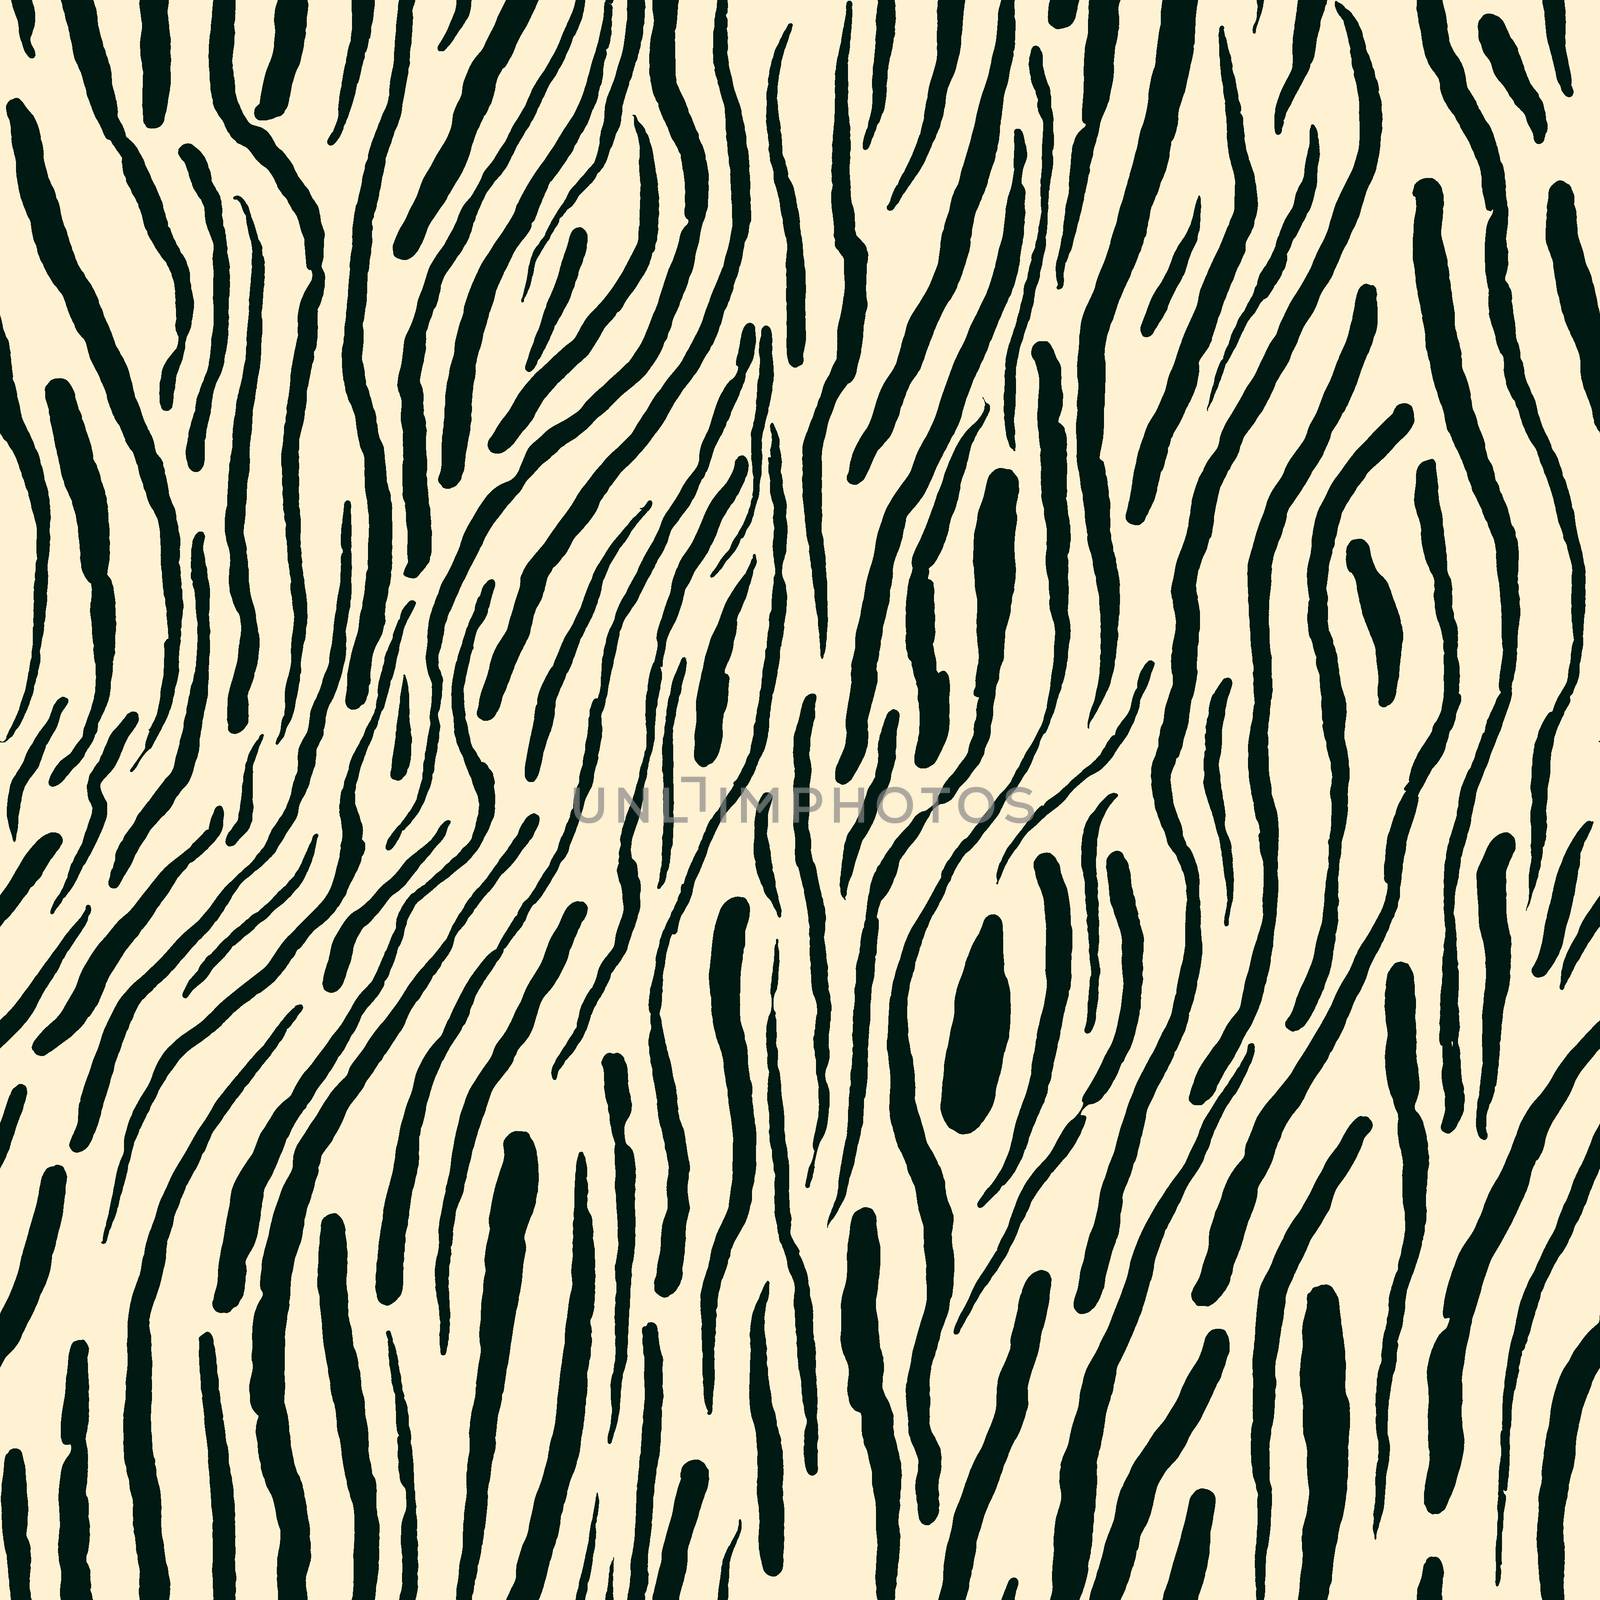 Animal print stripes seamless pattern on light background. Zebra skin handrawn texture. Monochrome endless background. Illustration design.